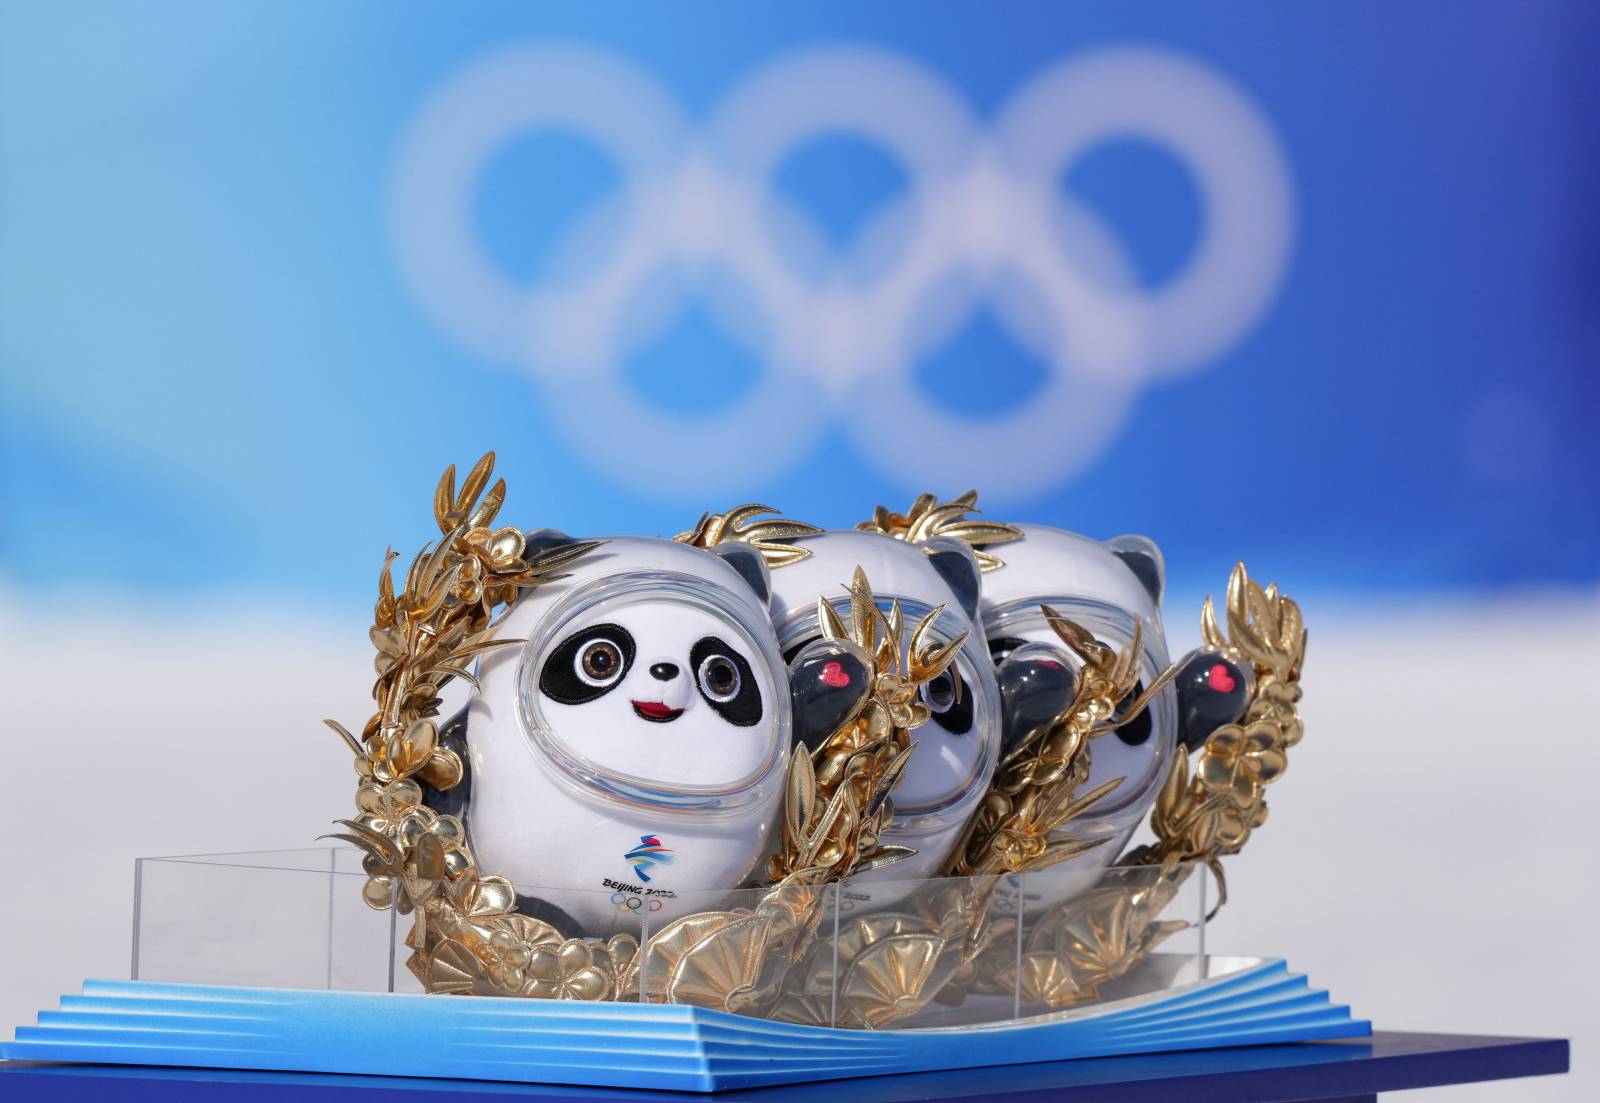 Сноуборд, мужской хафпайп на Олимпиаде в Пекине: где смотреть онлайн